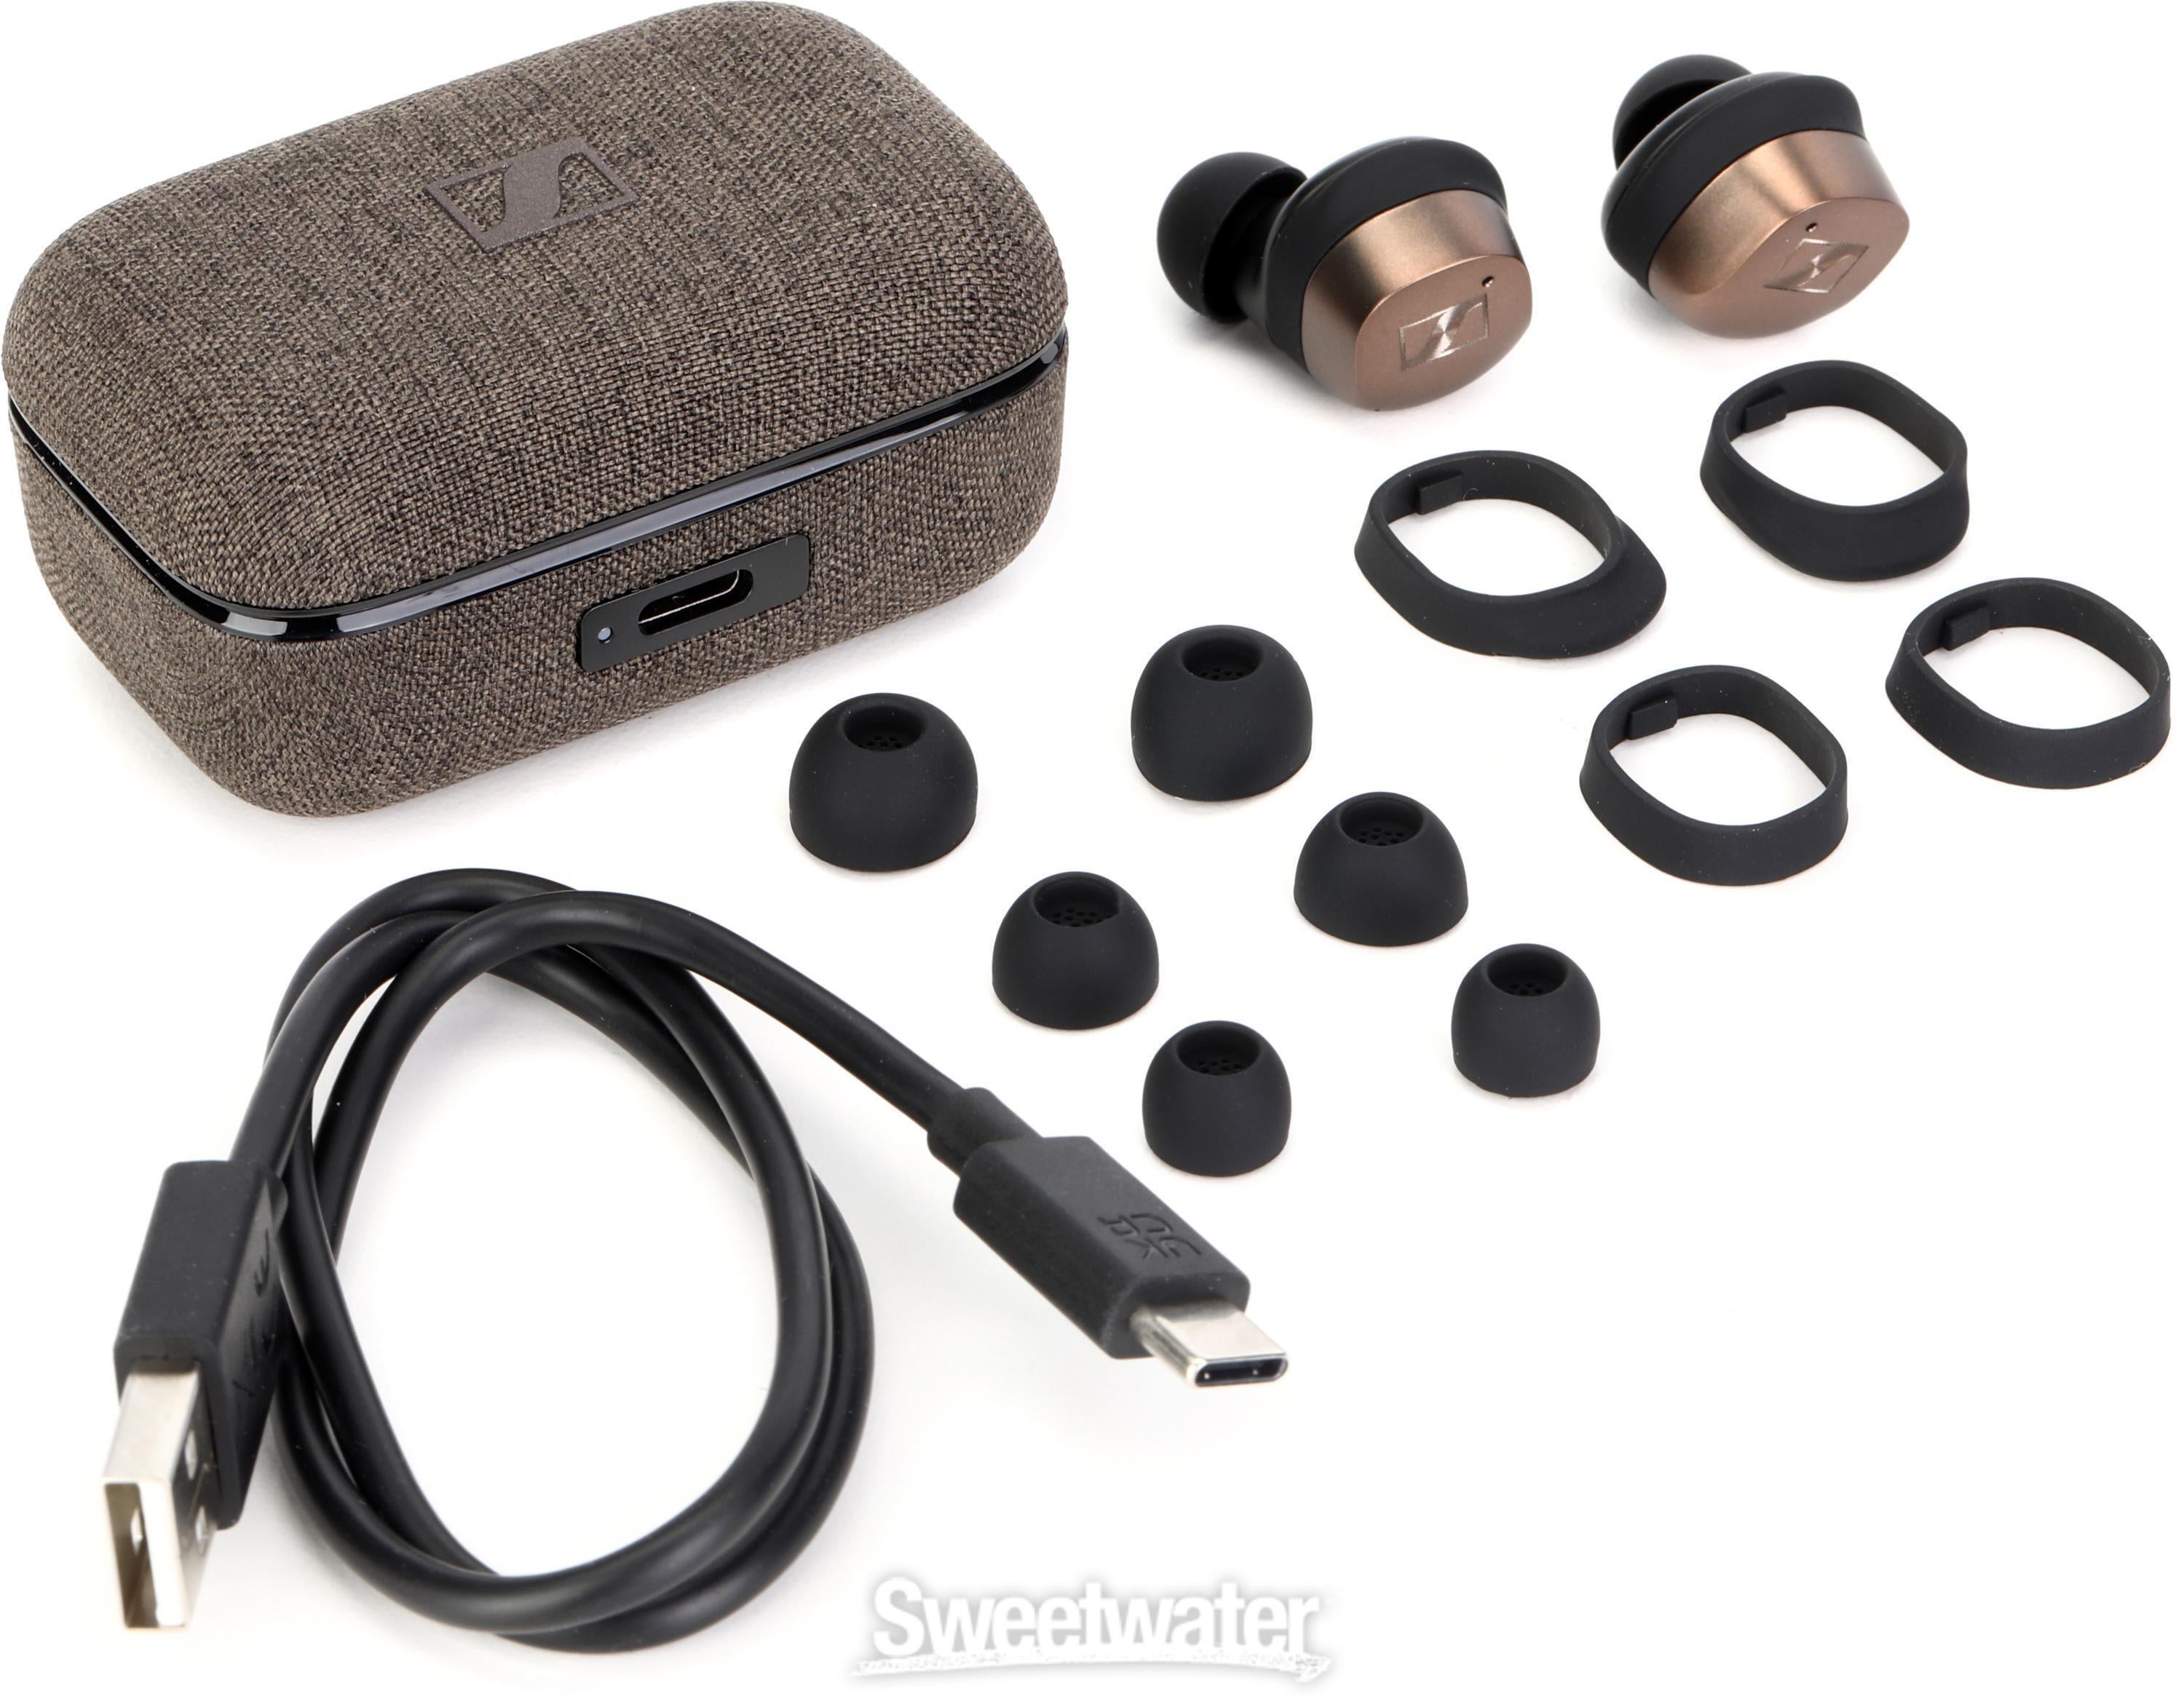 Sennheiser Momentum True Wireless 4 Earbuds - Black Copper 